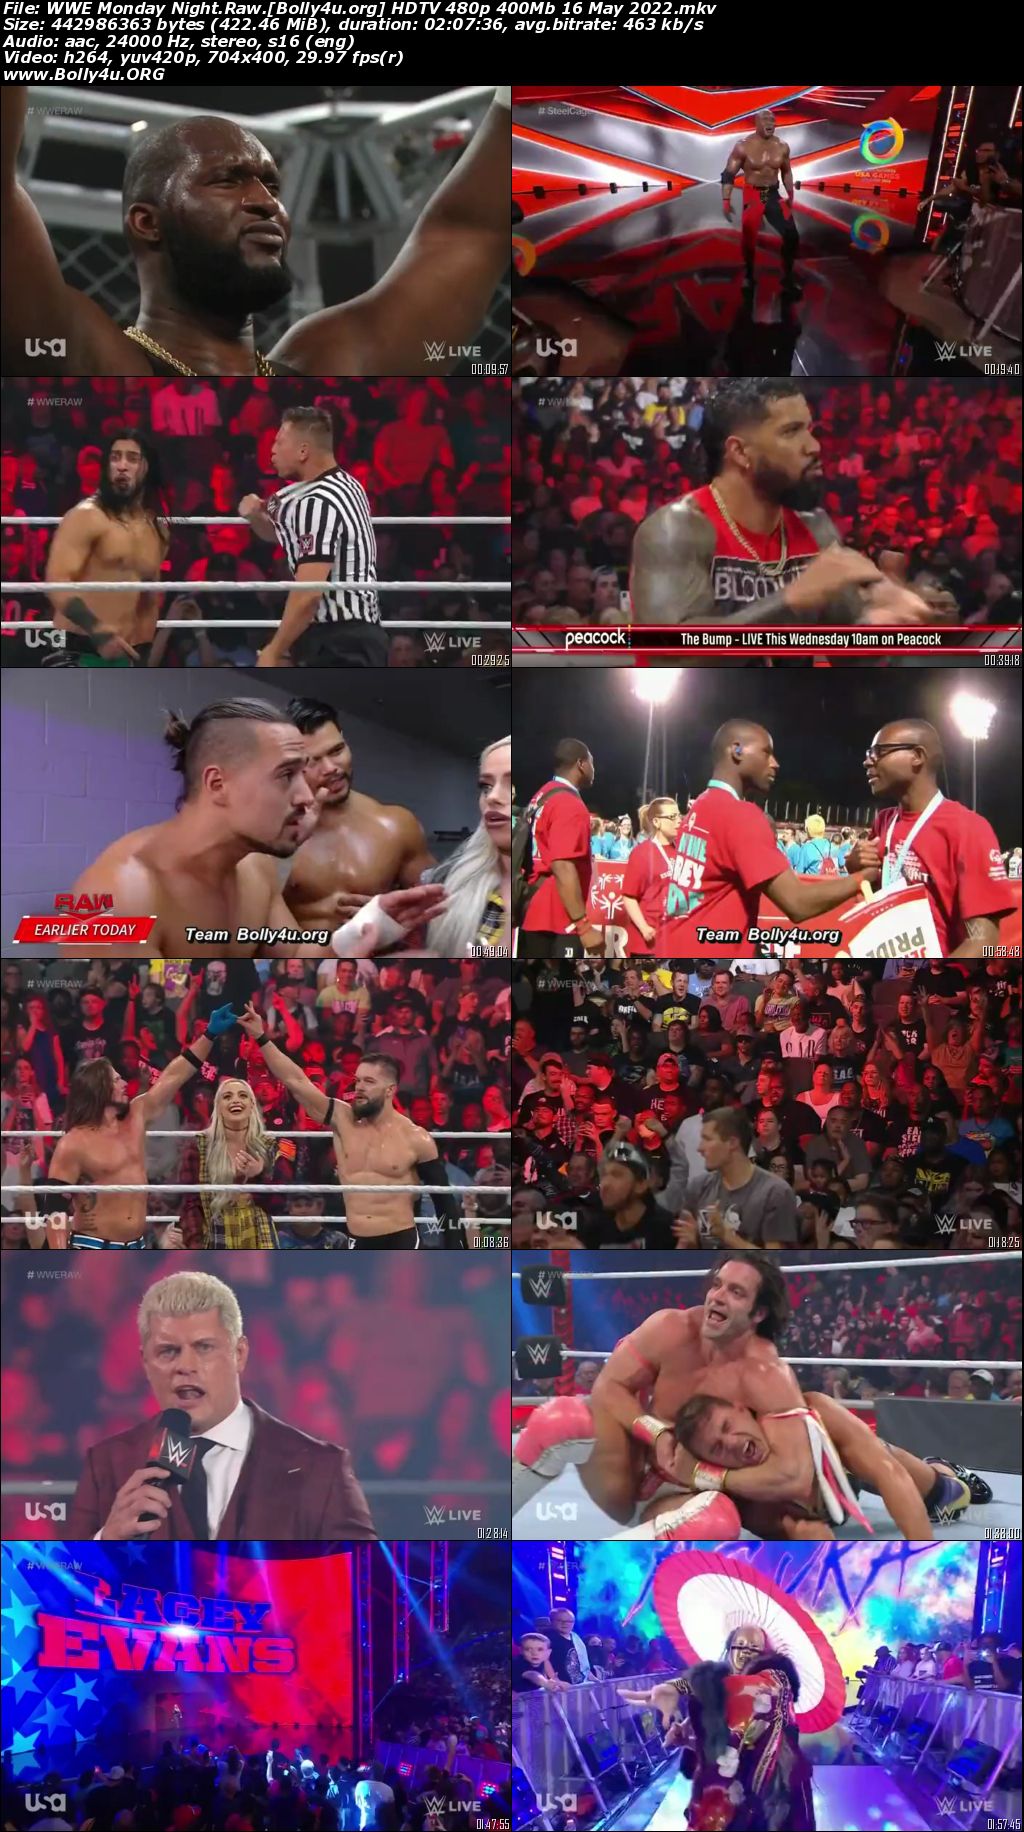 WWE Monday Night Raw HDTV 480p 400Mb 16 May 2022 Download